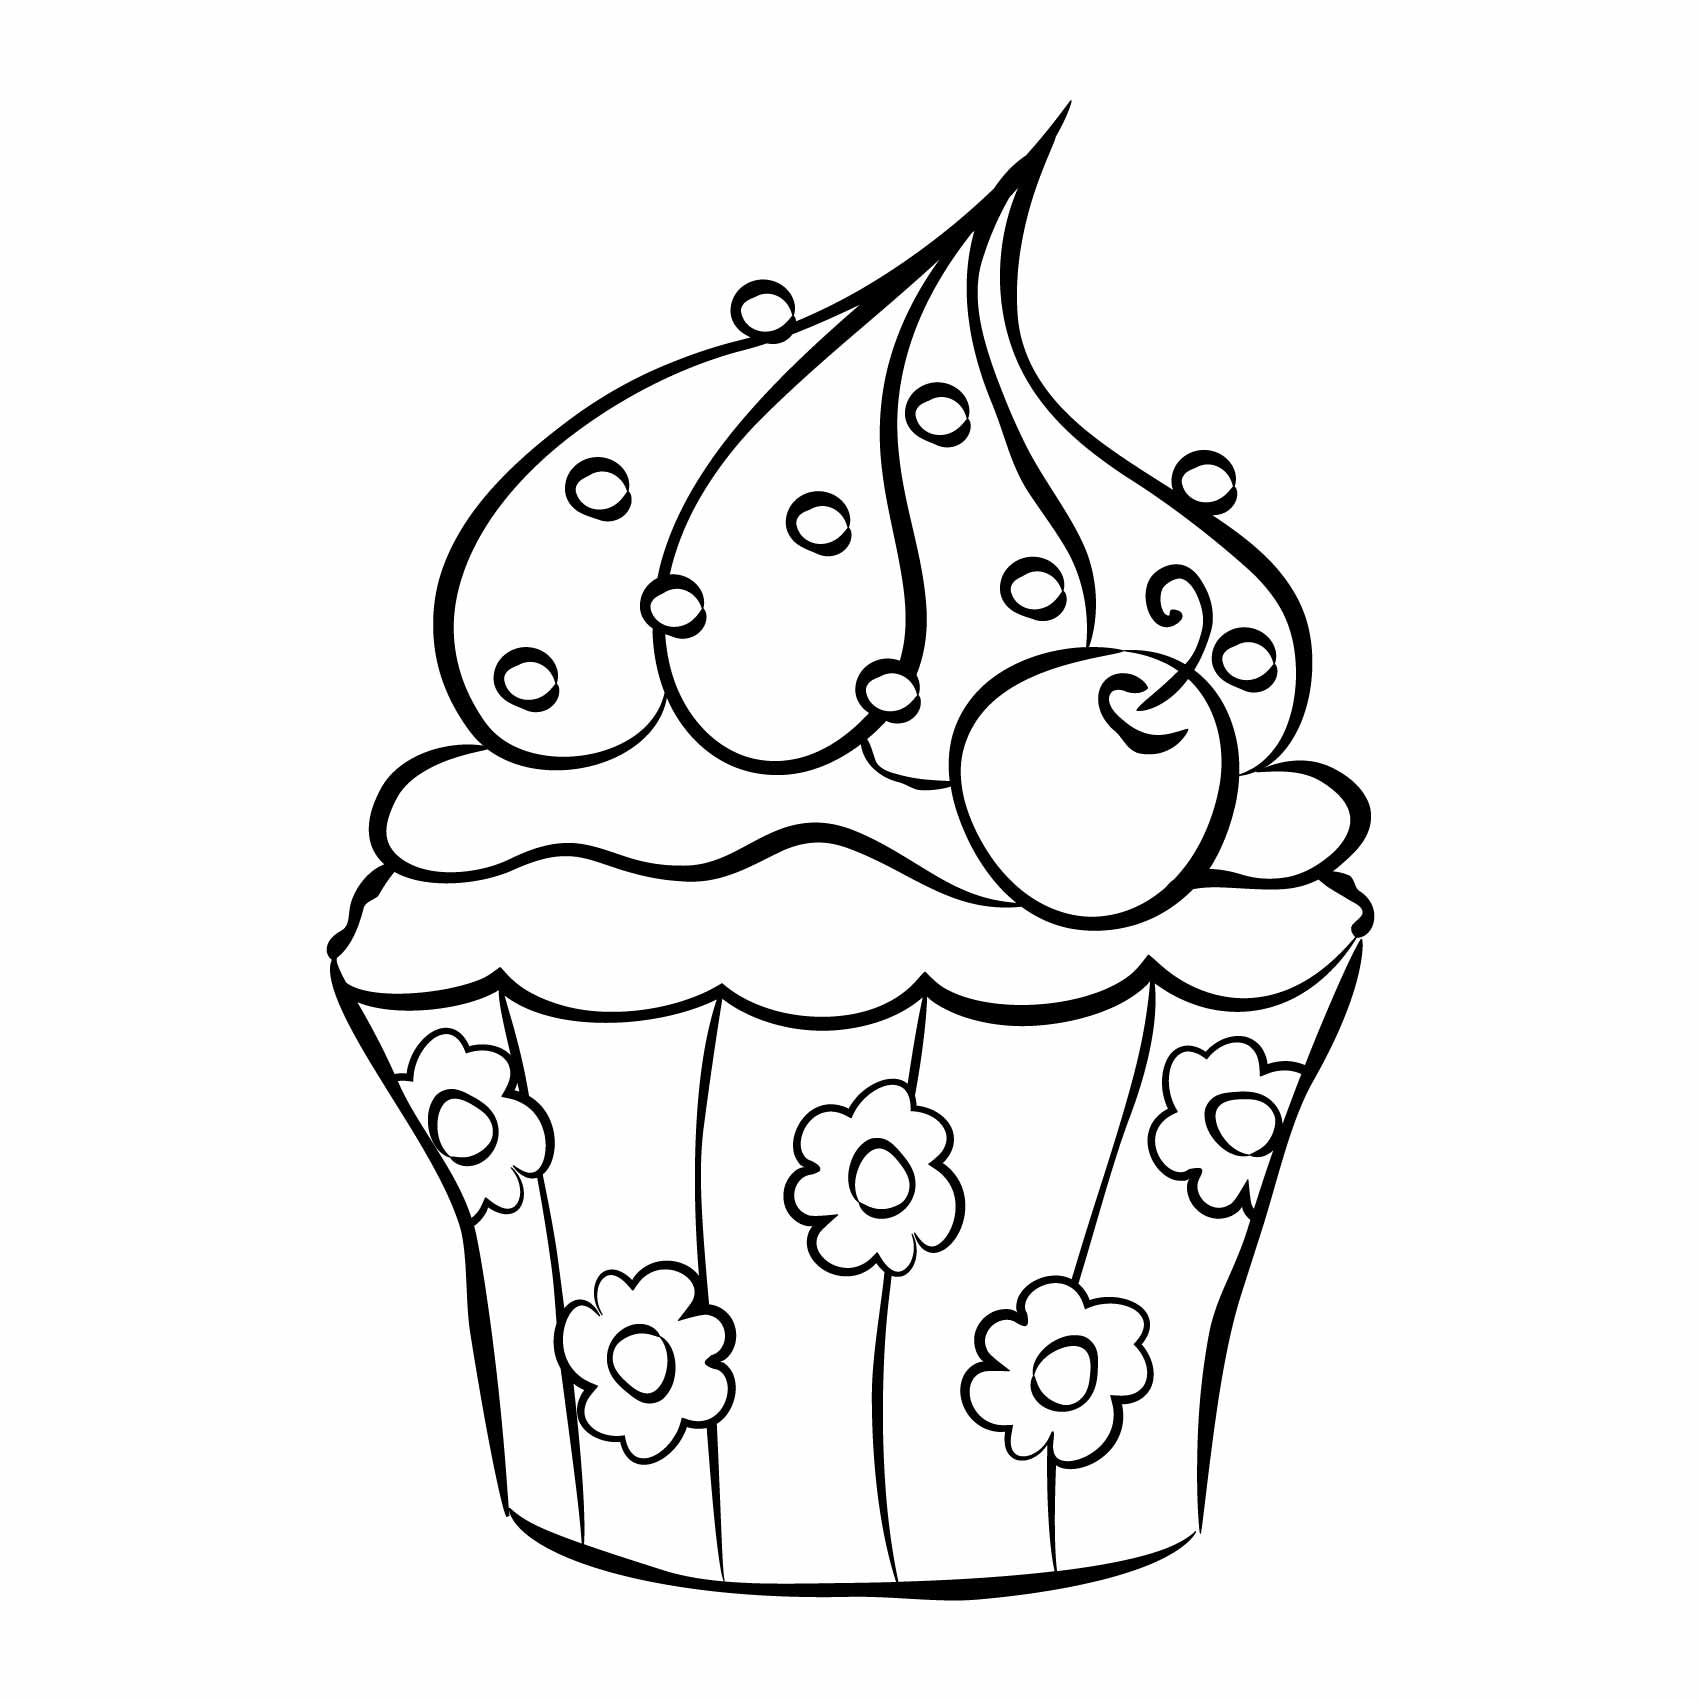 stickers-cupcake-mignon-ref23cupcake-autocollant-muraux-cuisine-salle-a-manger-salon-sticker-mural-deco-gateau-cupcakes-gateaux-(2)